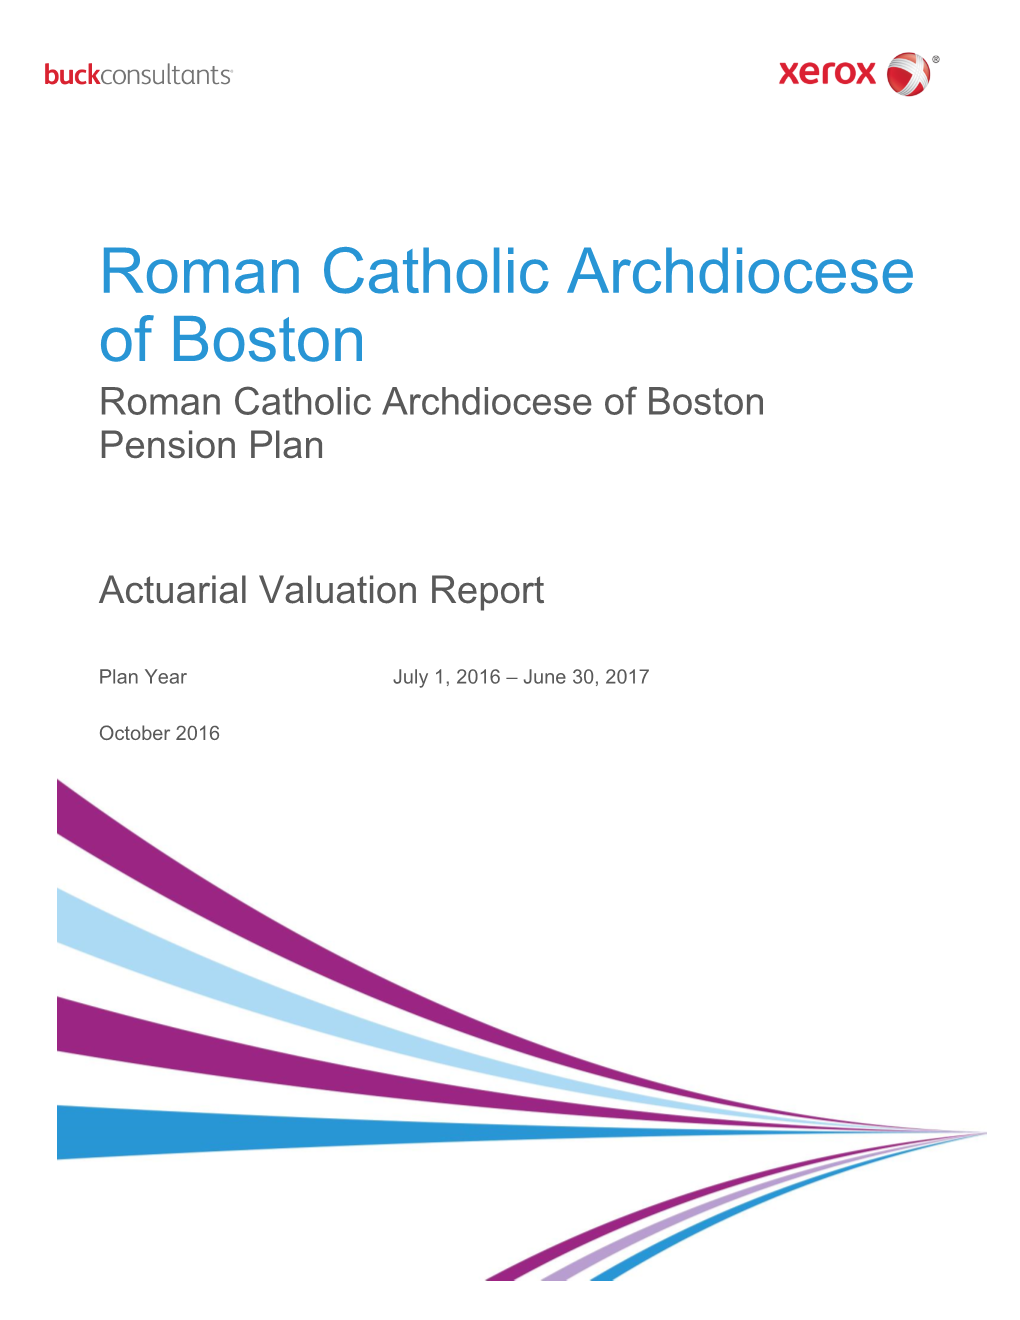 RCAB Pension Plan Actuarial Valuation Report